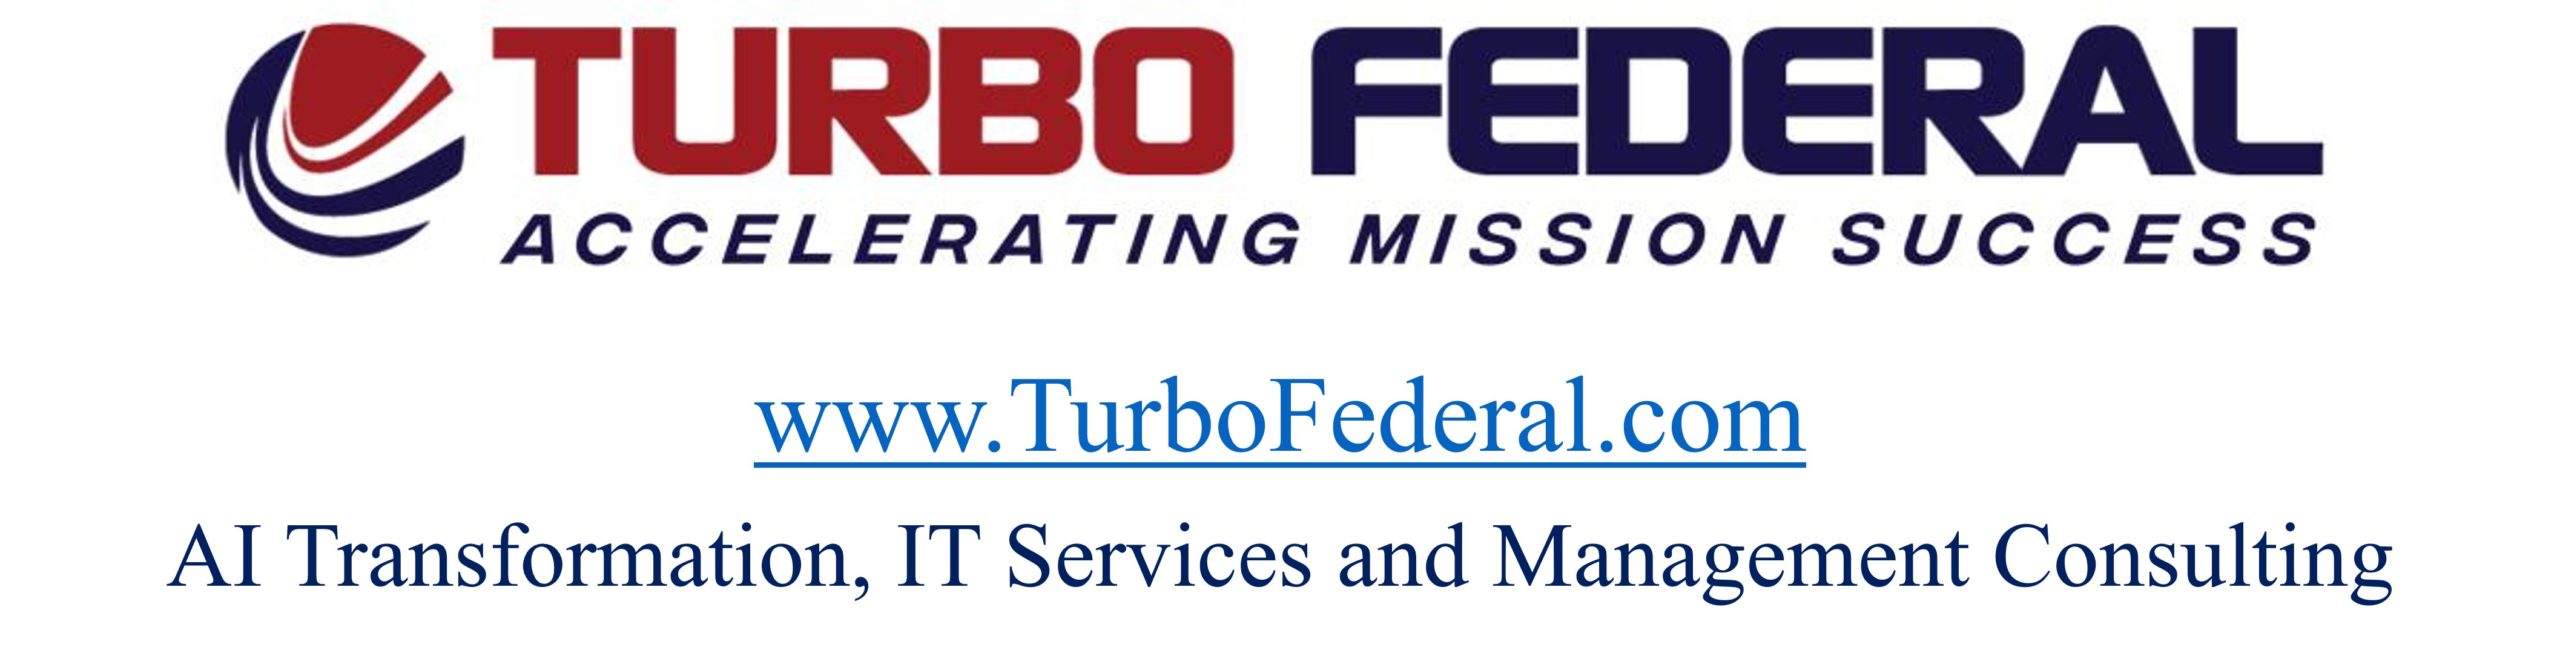 Turbo Federal